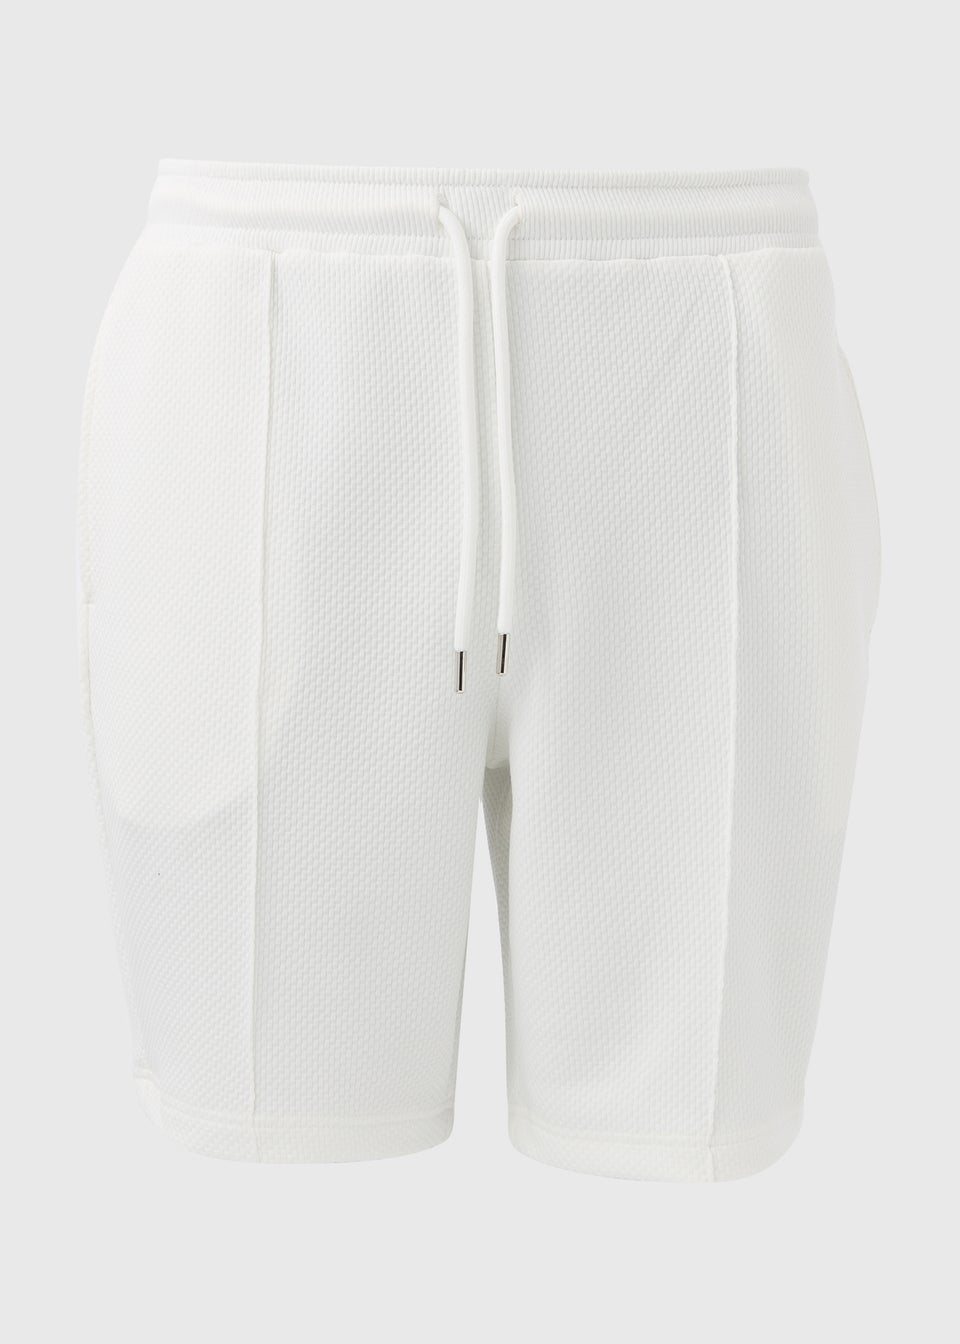 White Textured Shorts